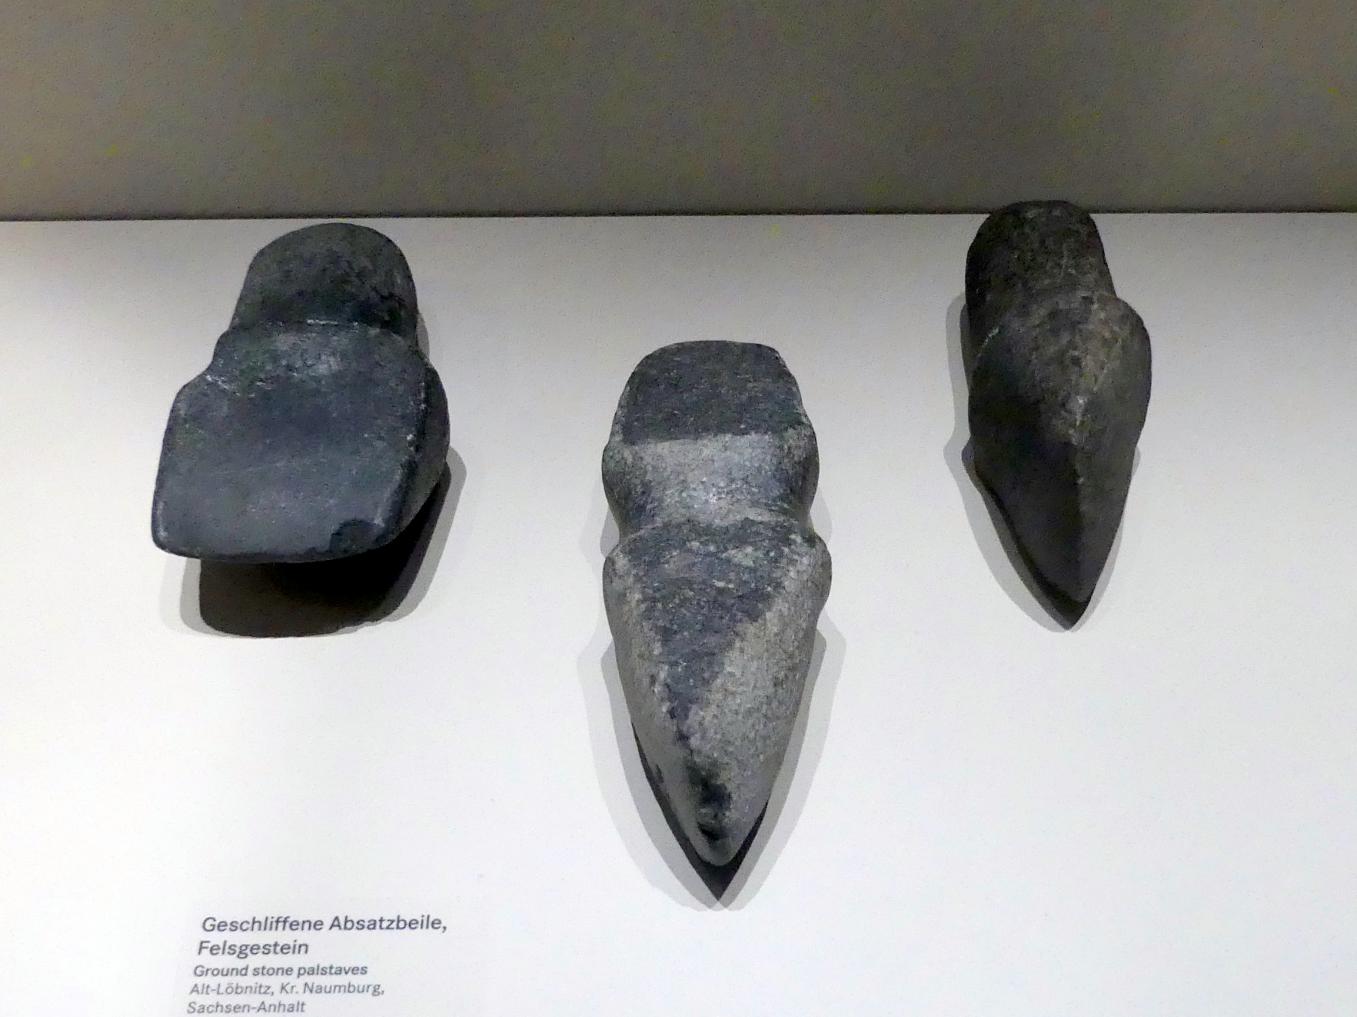 Geschliffenes Absatzbeil, Nordisches Neolithikum, 4400 - 2350 v. Chr., 3500 - 2800 v. Chr., Bild 1/2